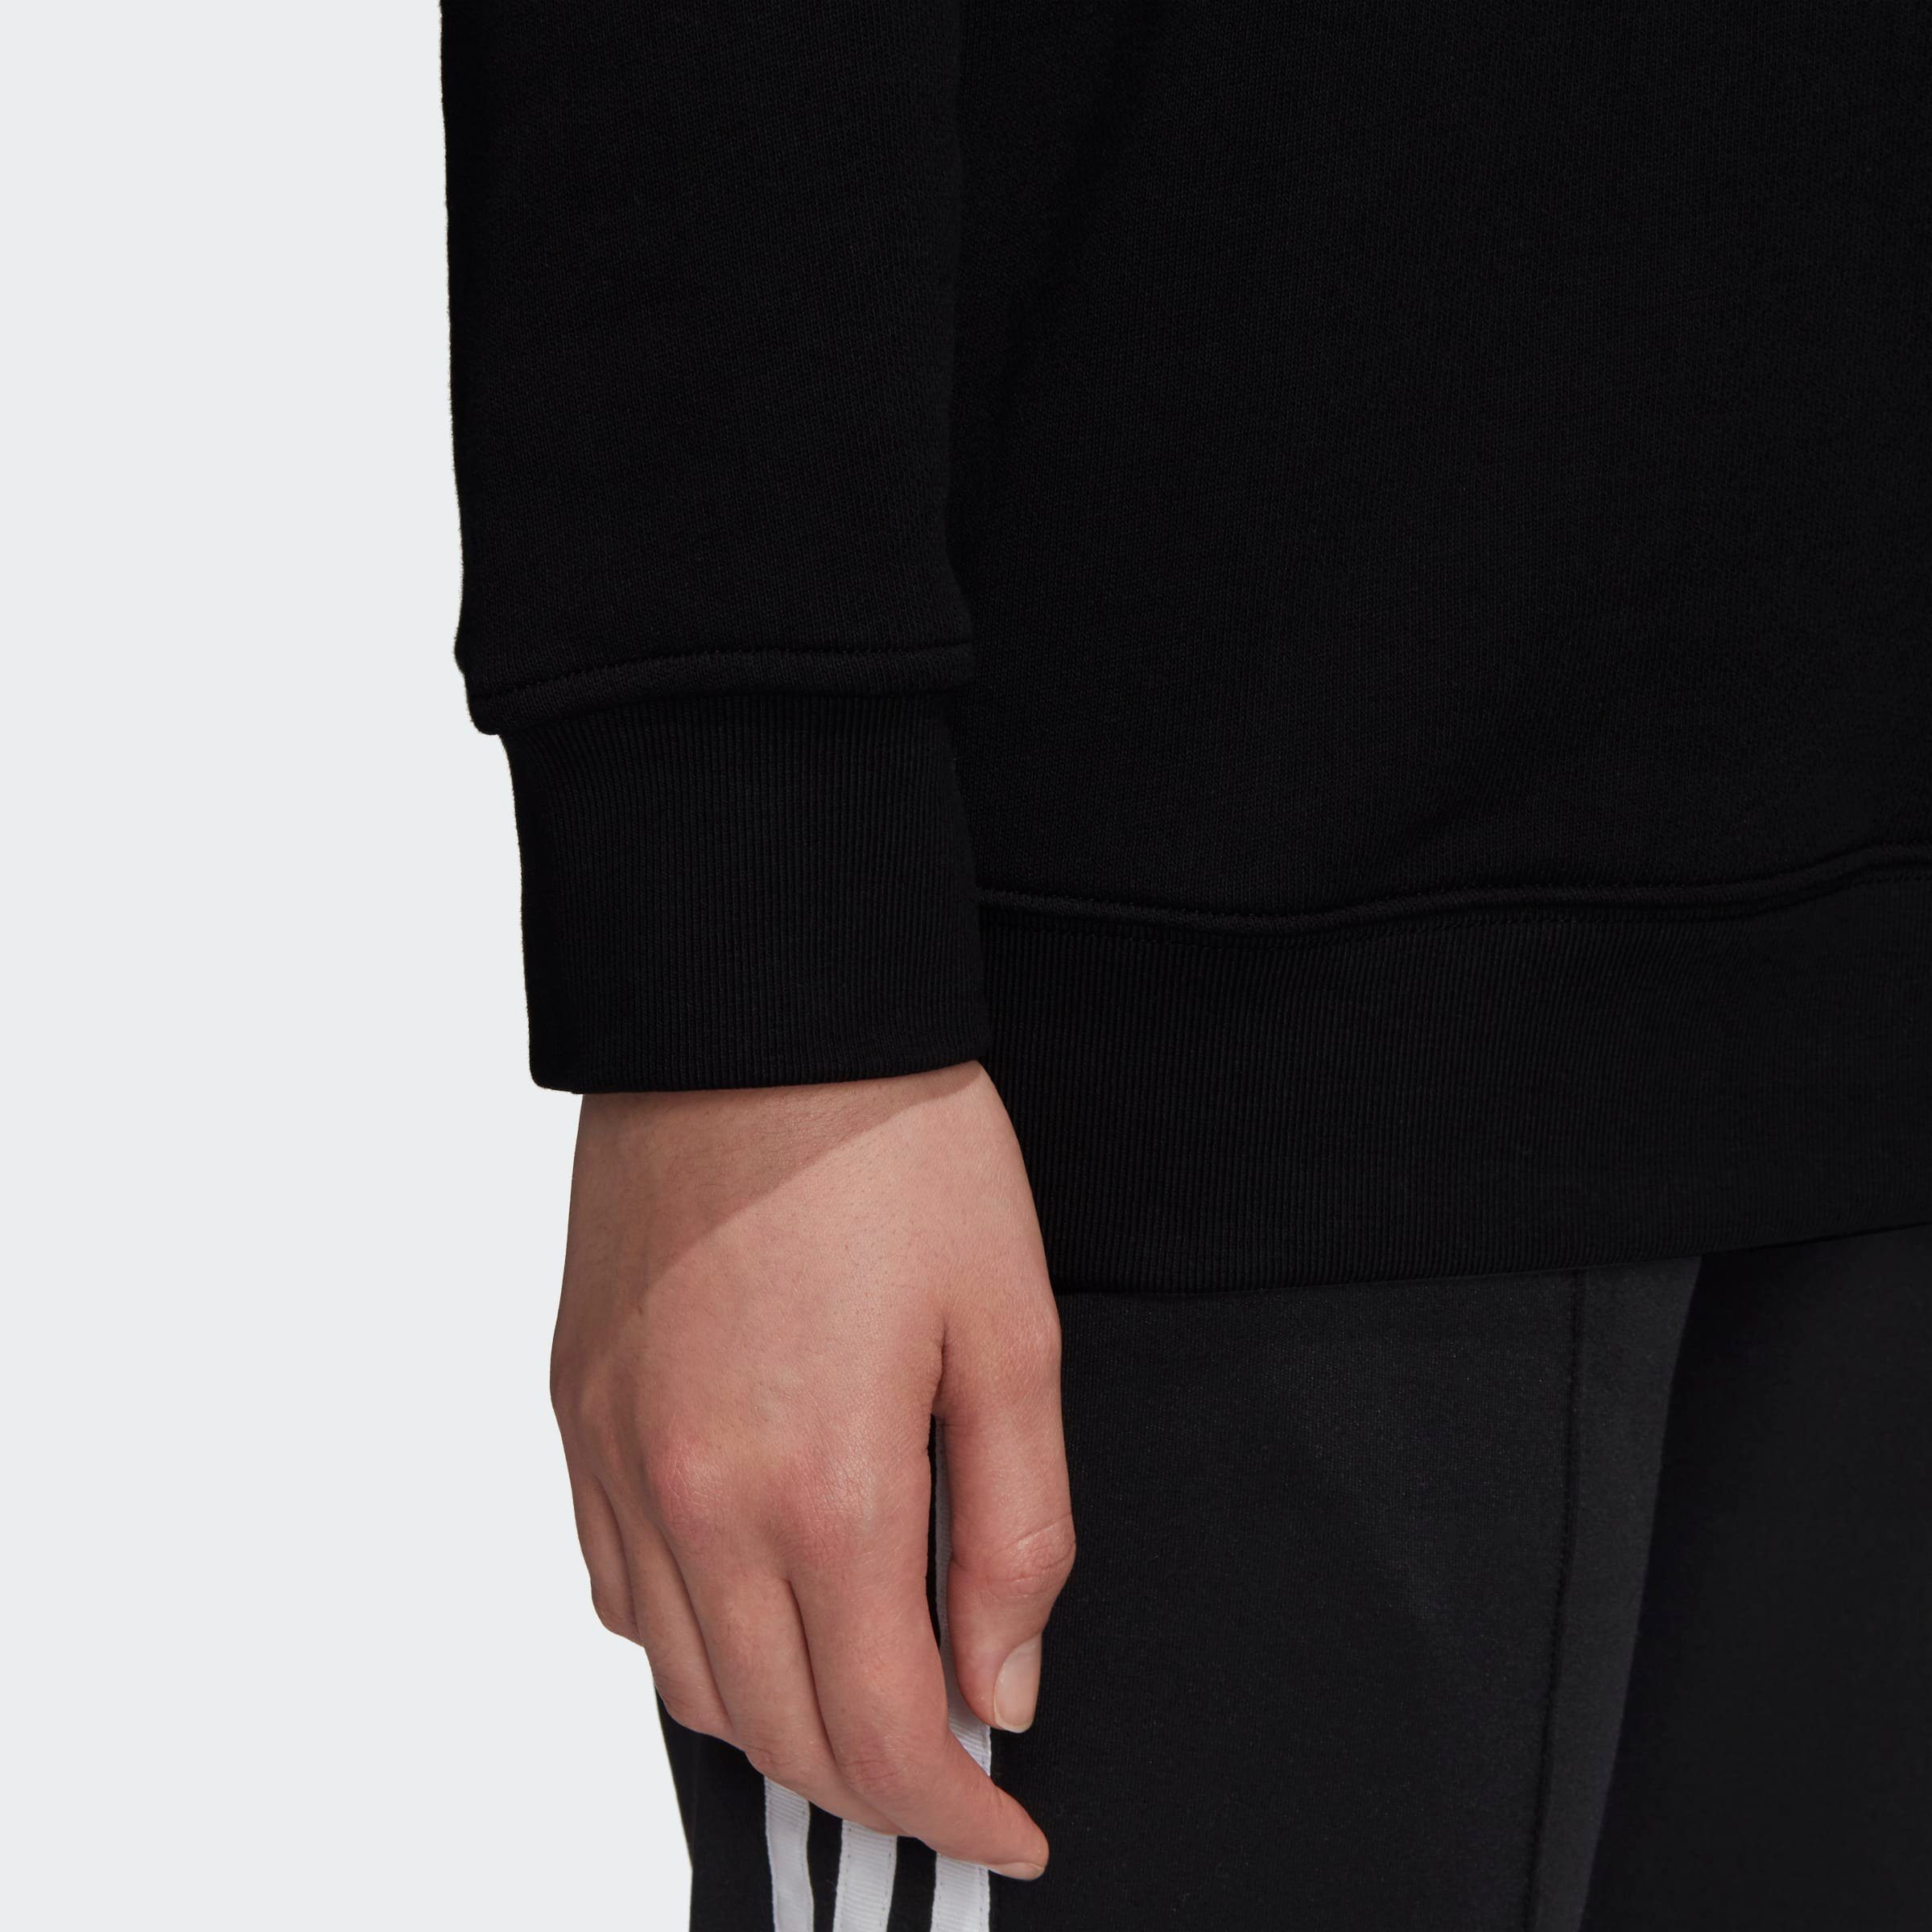 BLACK/WHITE Sweatshirt adidas TREFOIL Originals